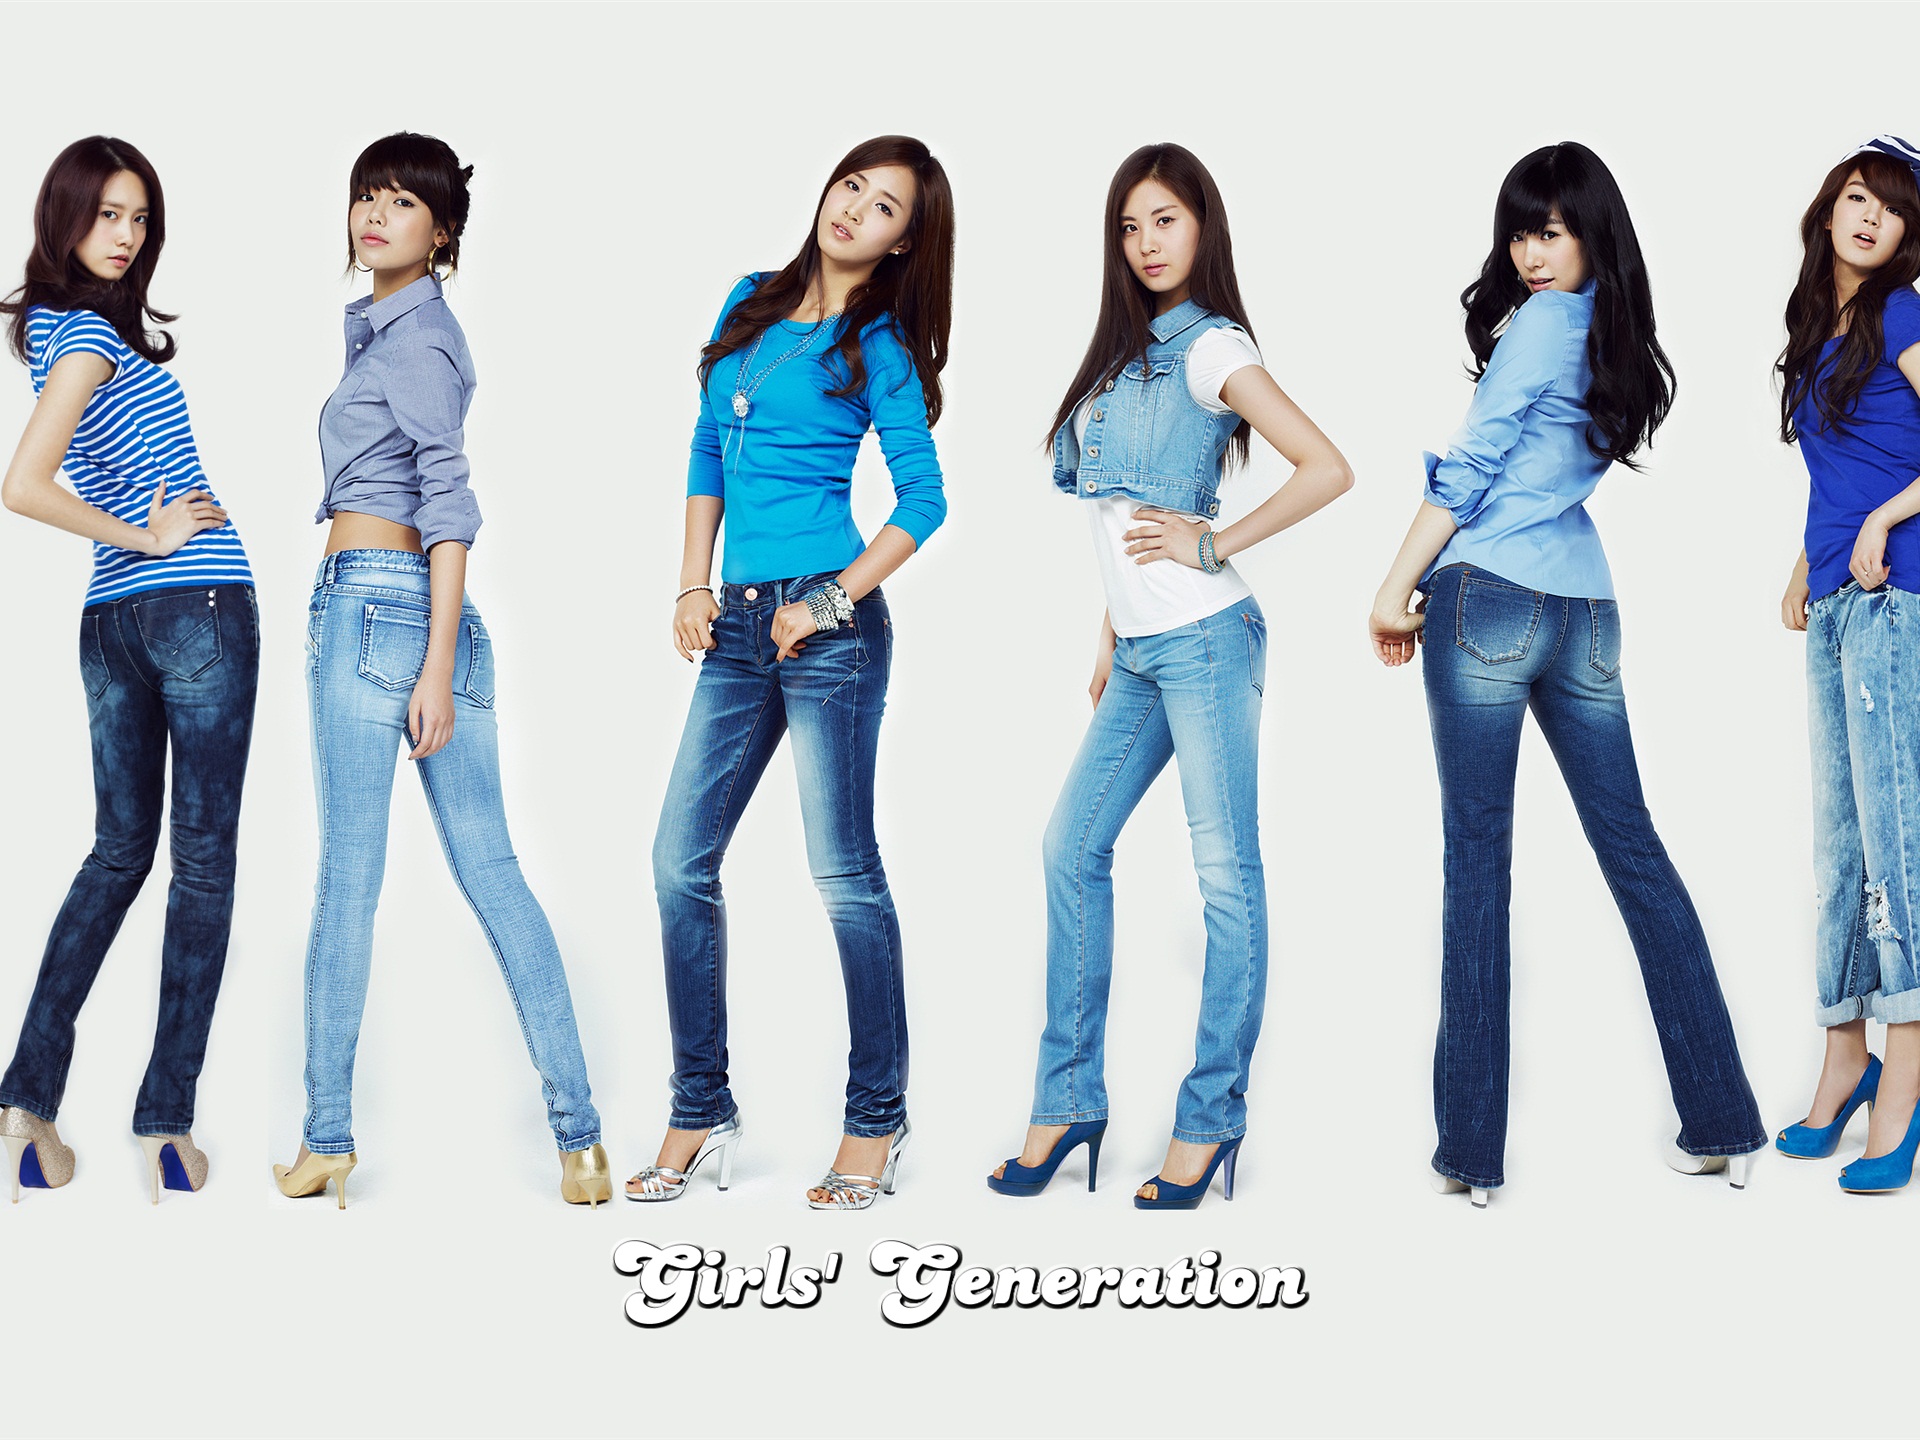 Girls Generation neuesten HD Wallpapers Collection #22 - 1920x1440